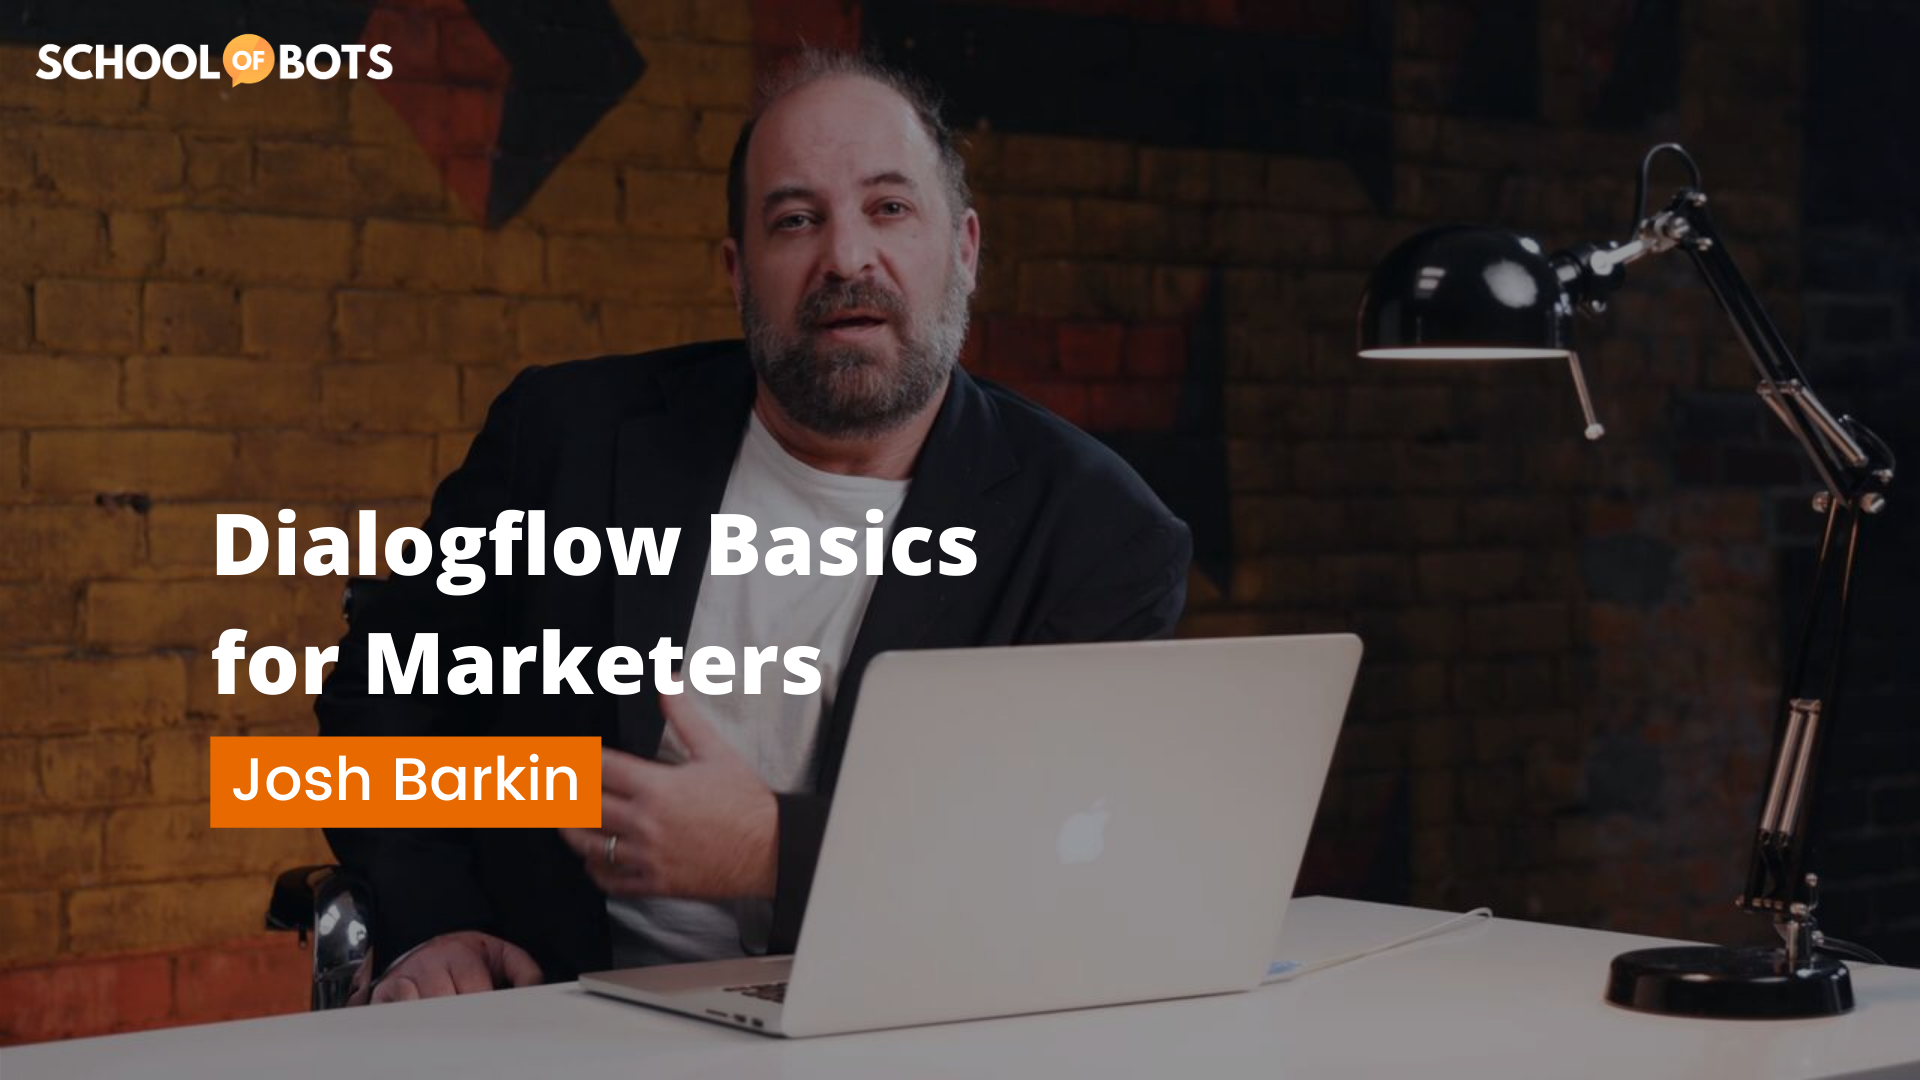 josh barkin dialogflow basics for marketers instructor